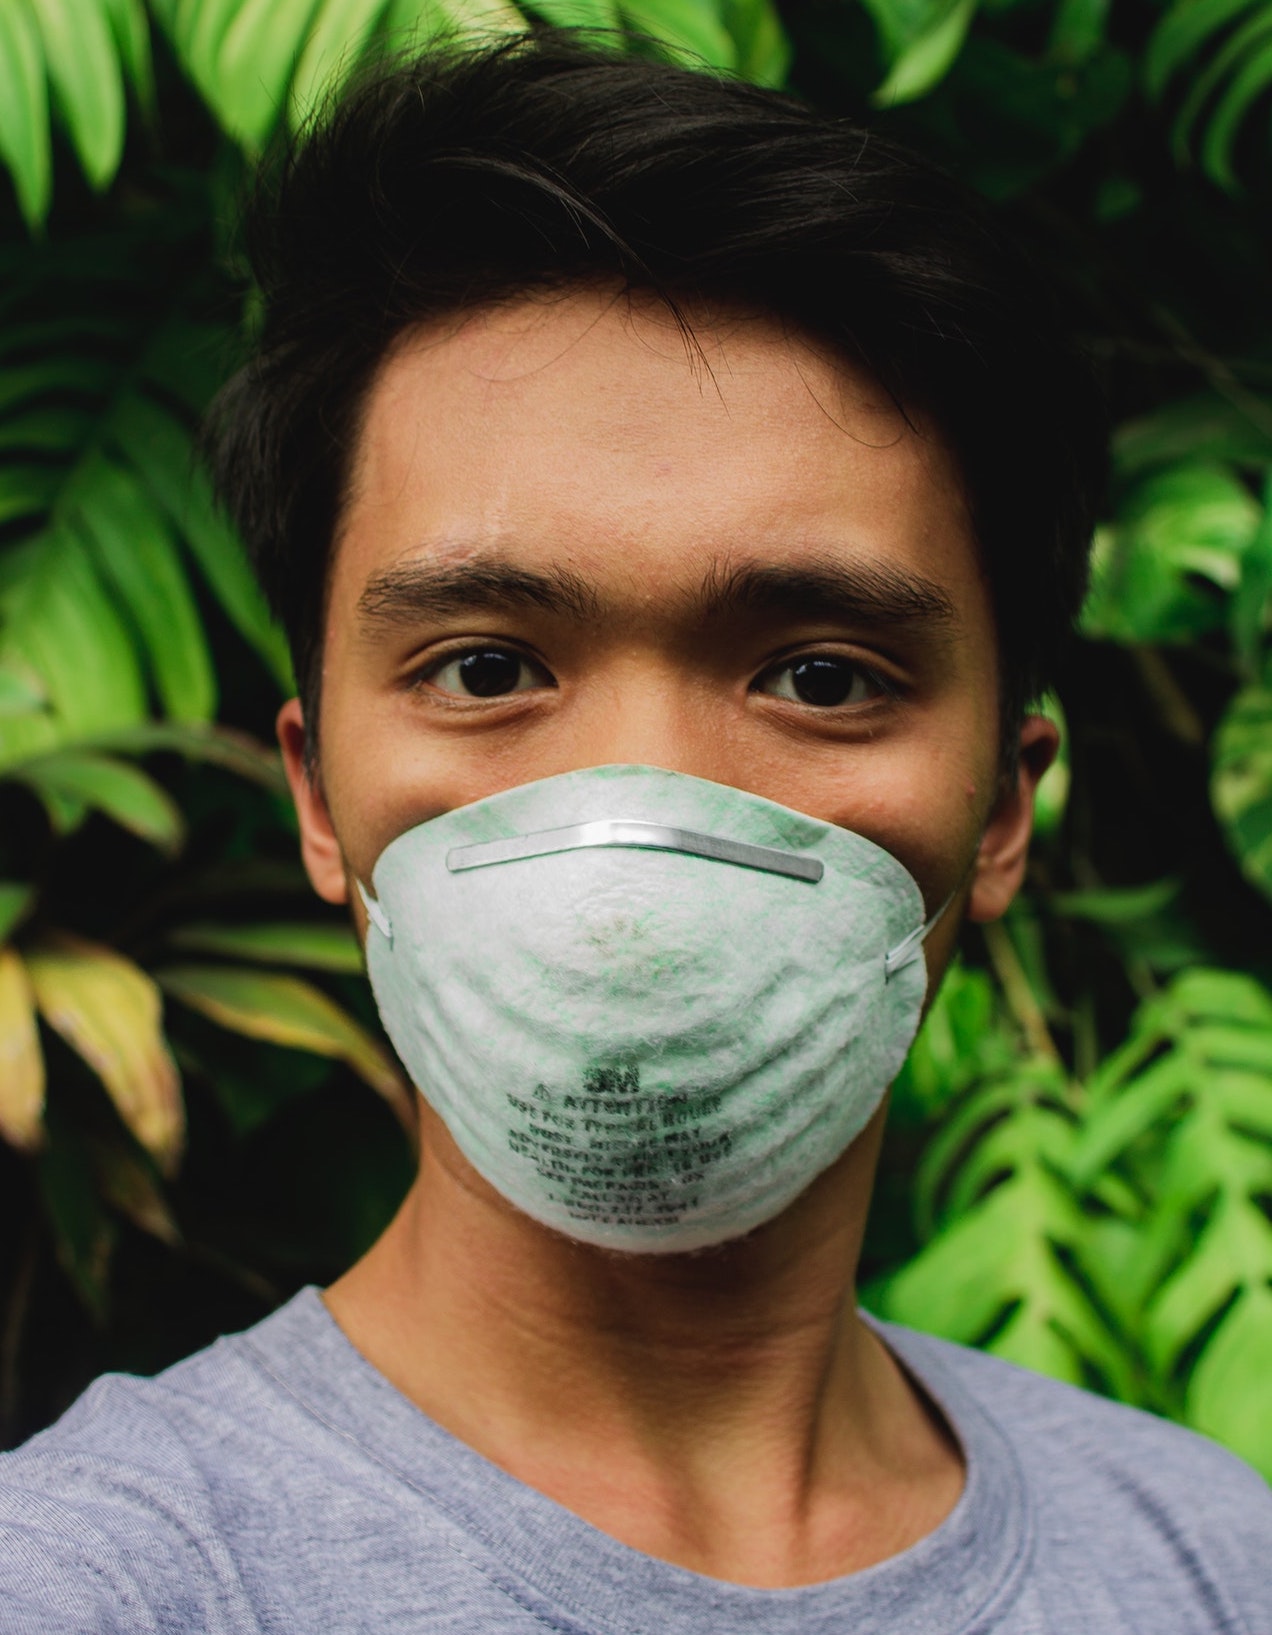 man wearing face mask for corona virus protection